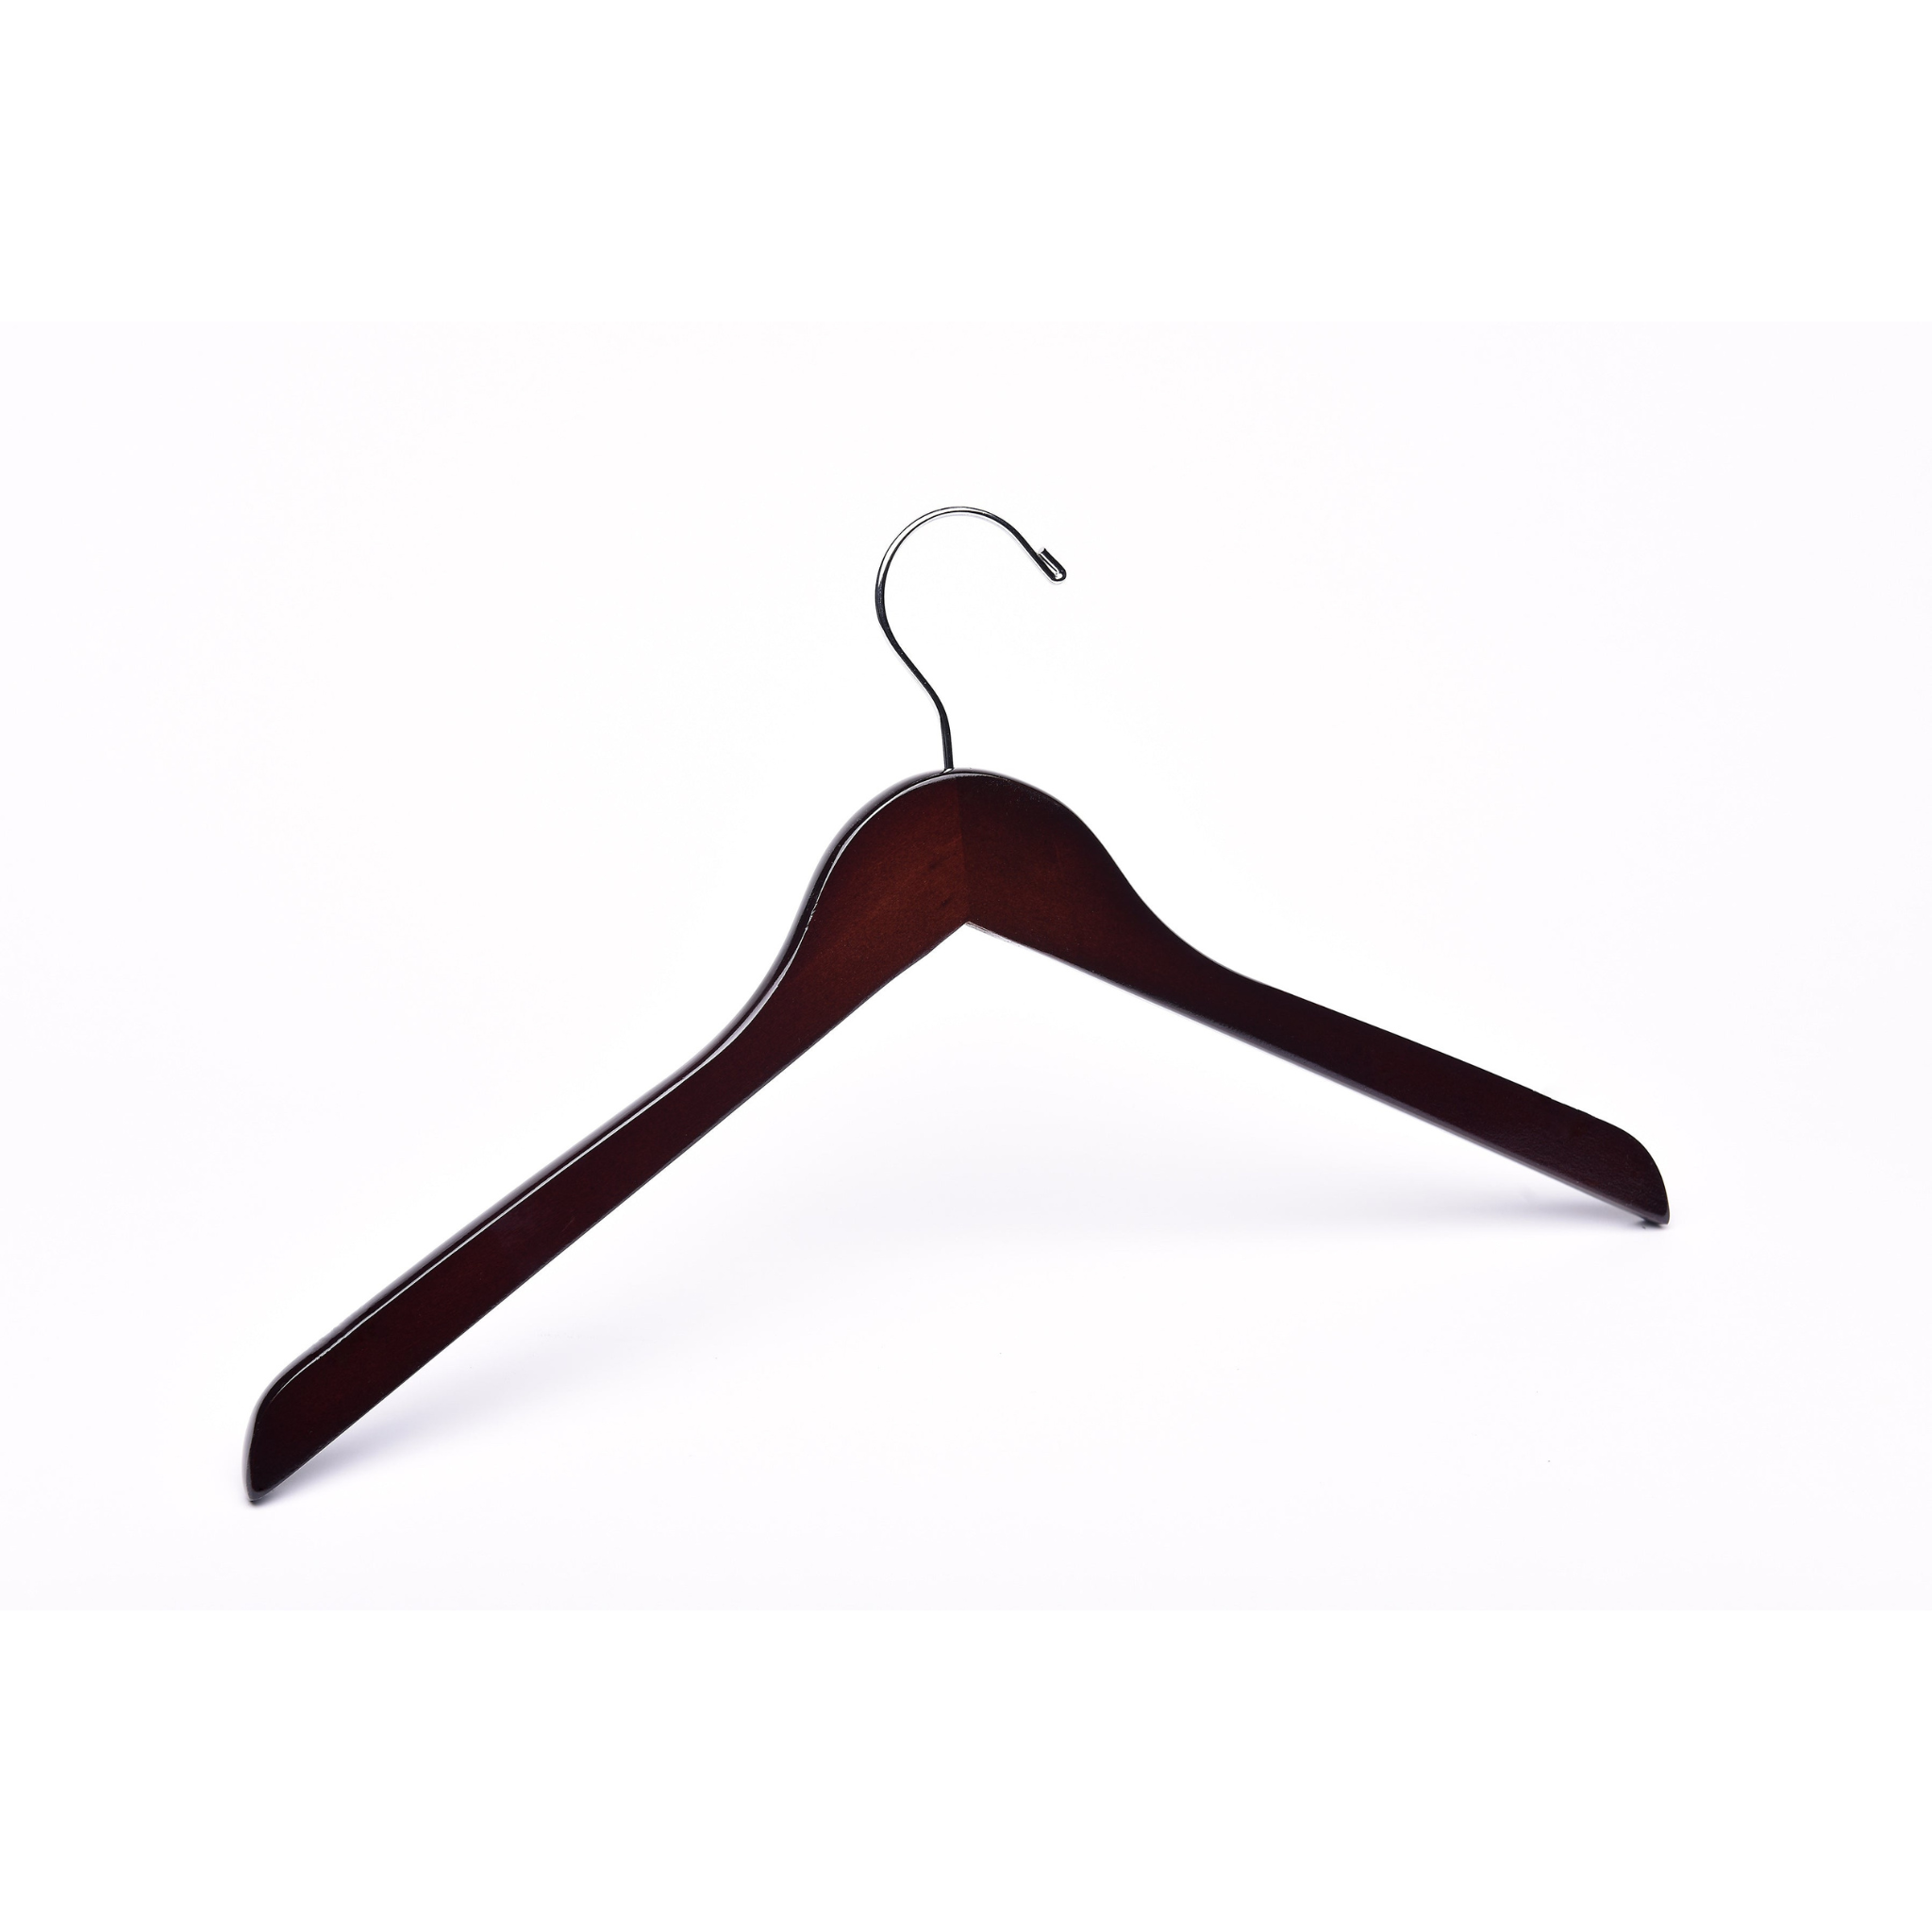 Dark Walnut Quality Wooden Clothes Hangers (No Shoulder Notch)